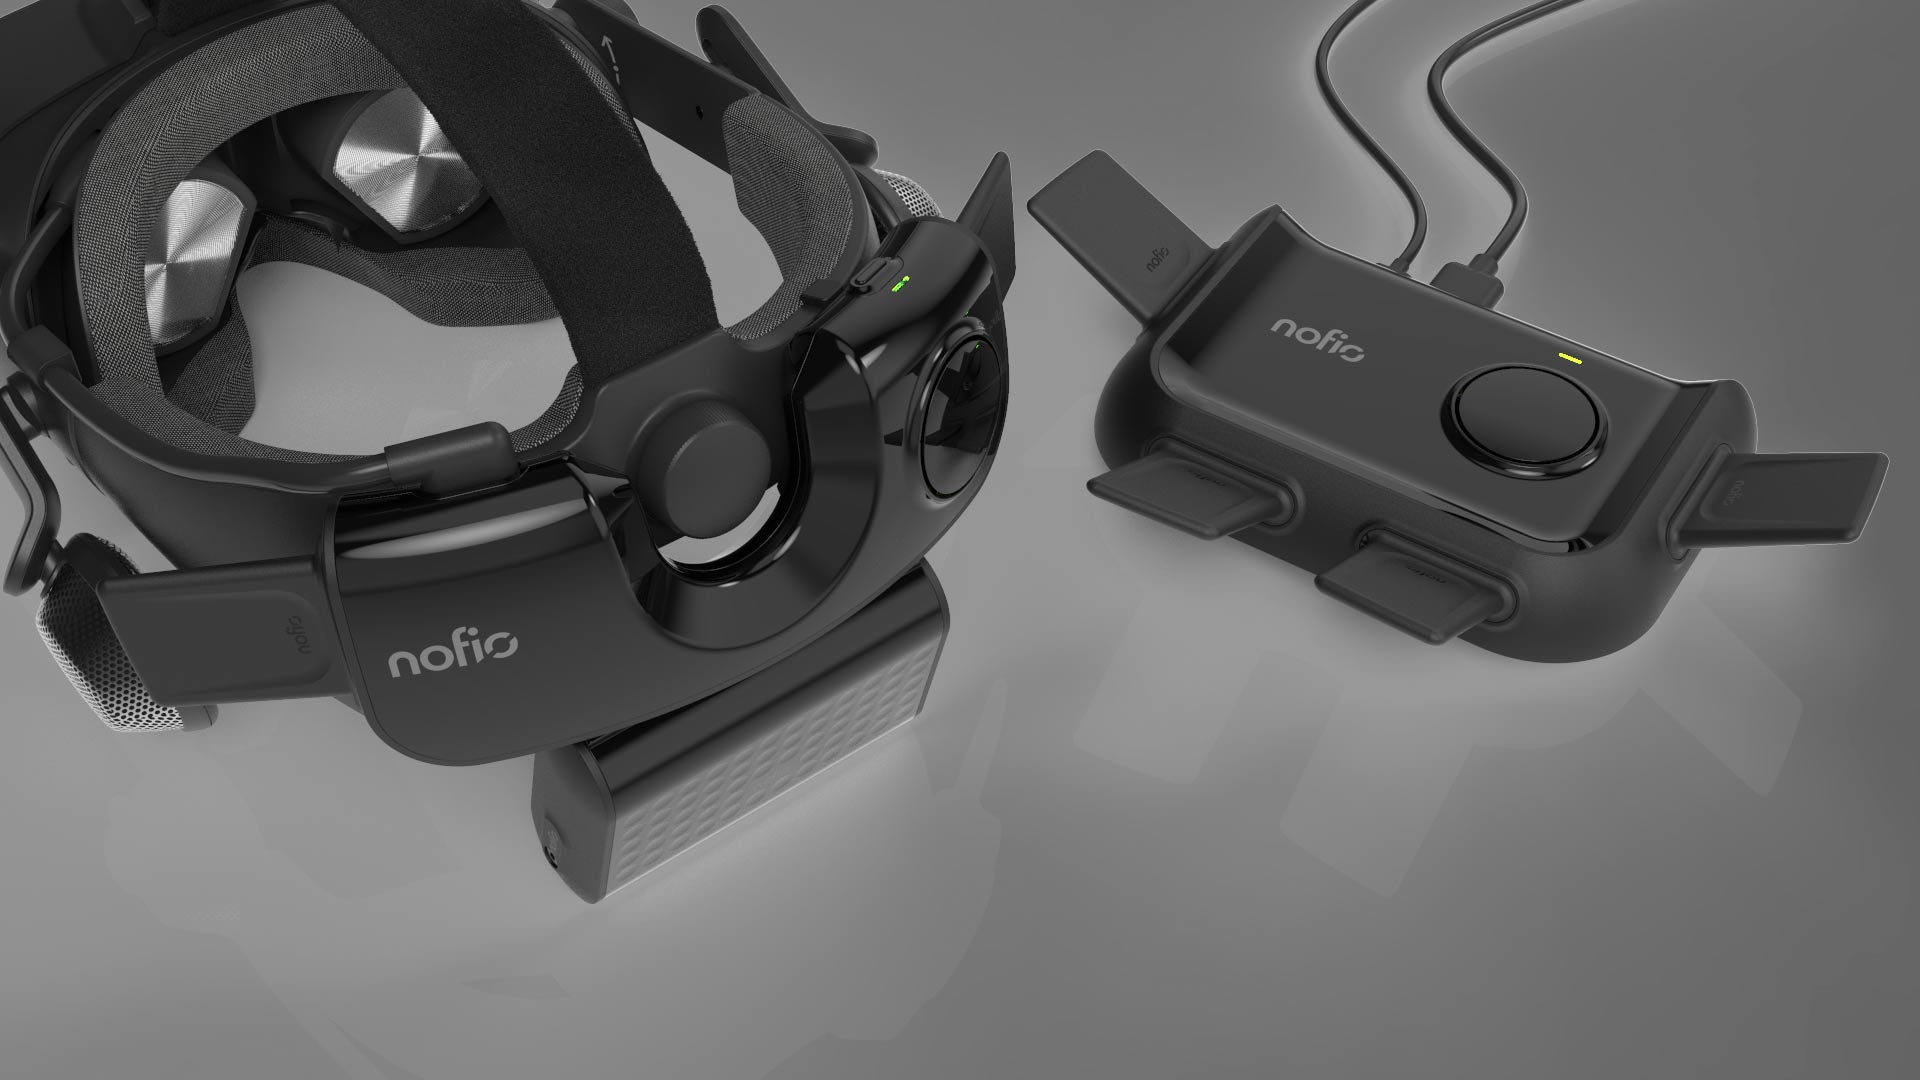 Valve Index hands-on: Impressive, expensive, inconvenient VR